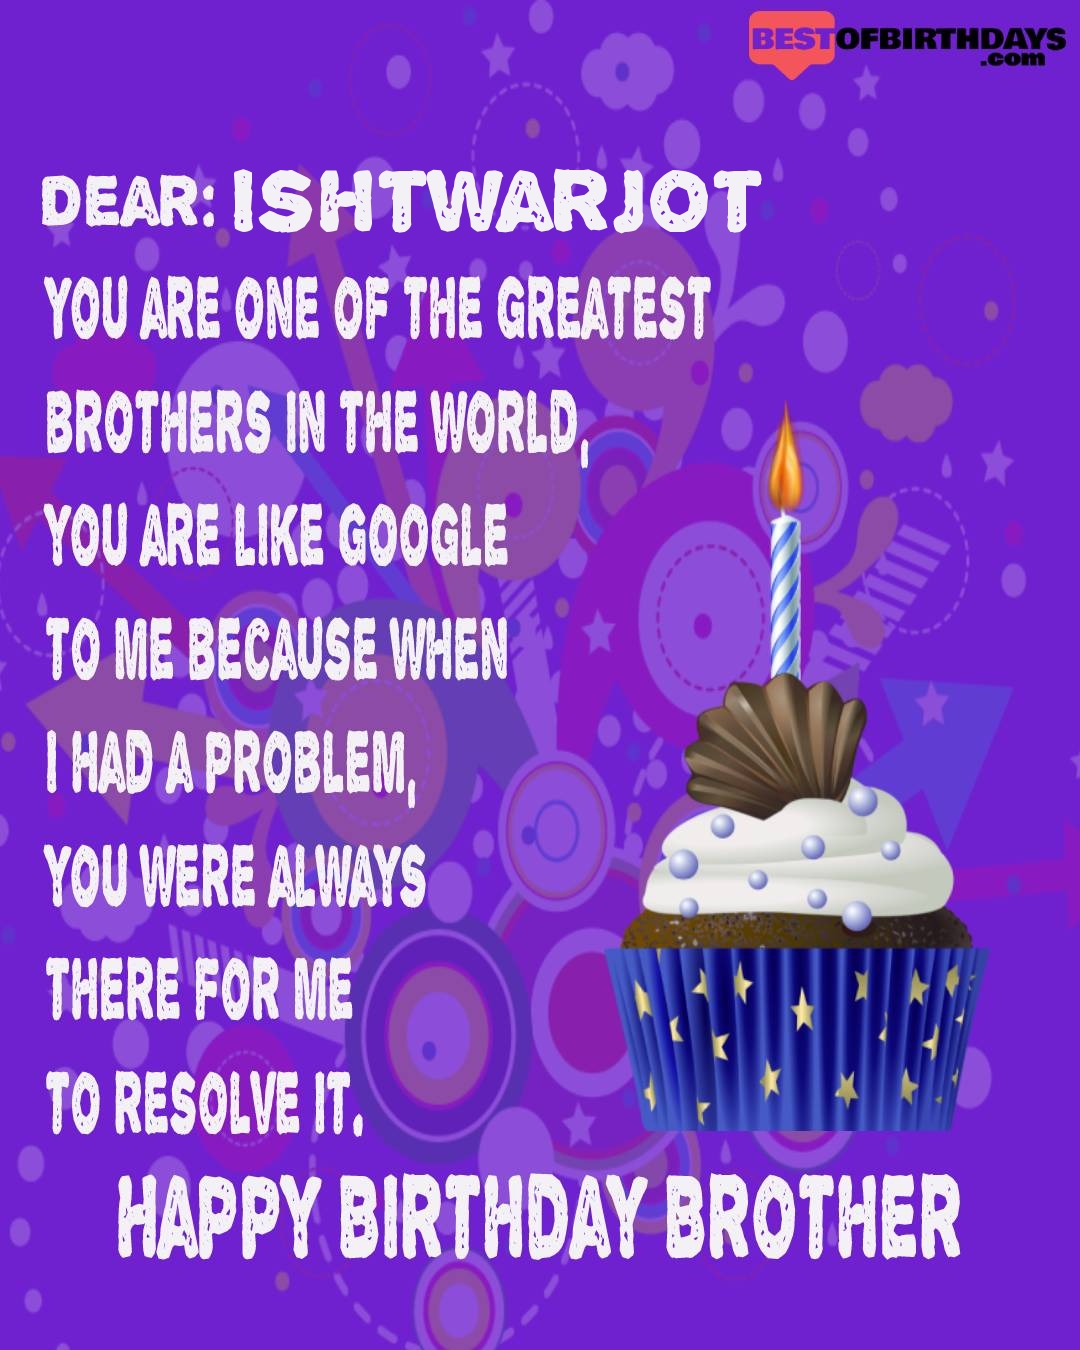 Happy birthday ishtwarjot bhai brother bro